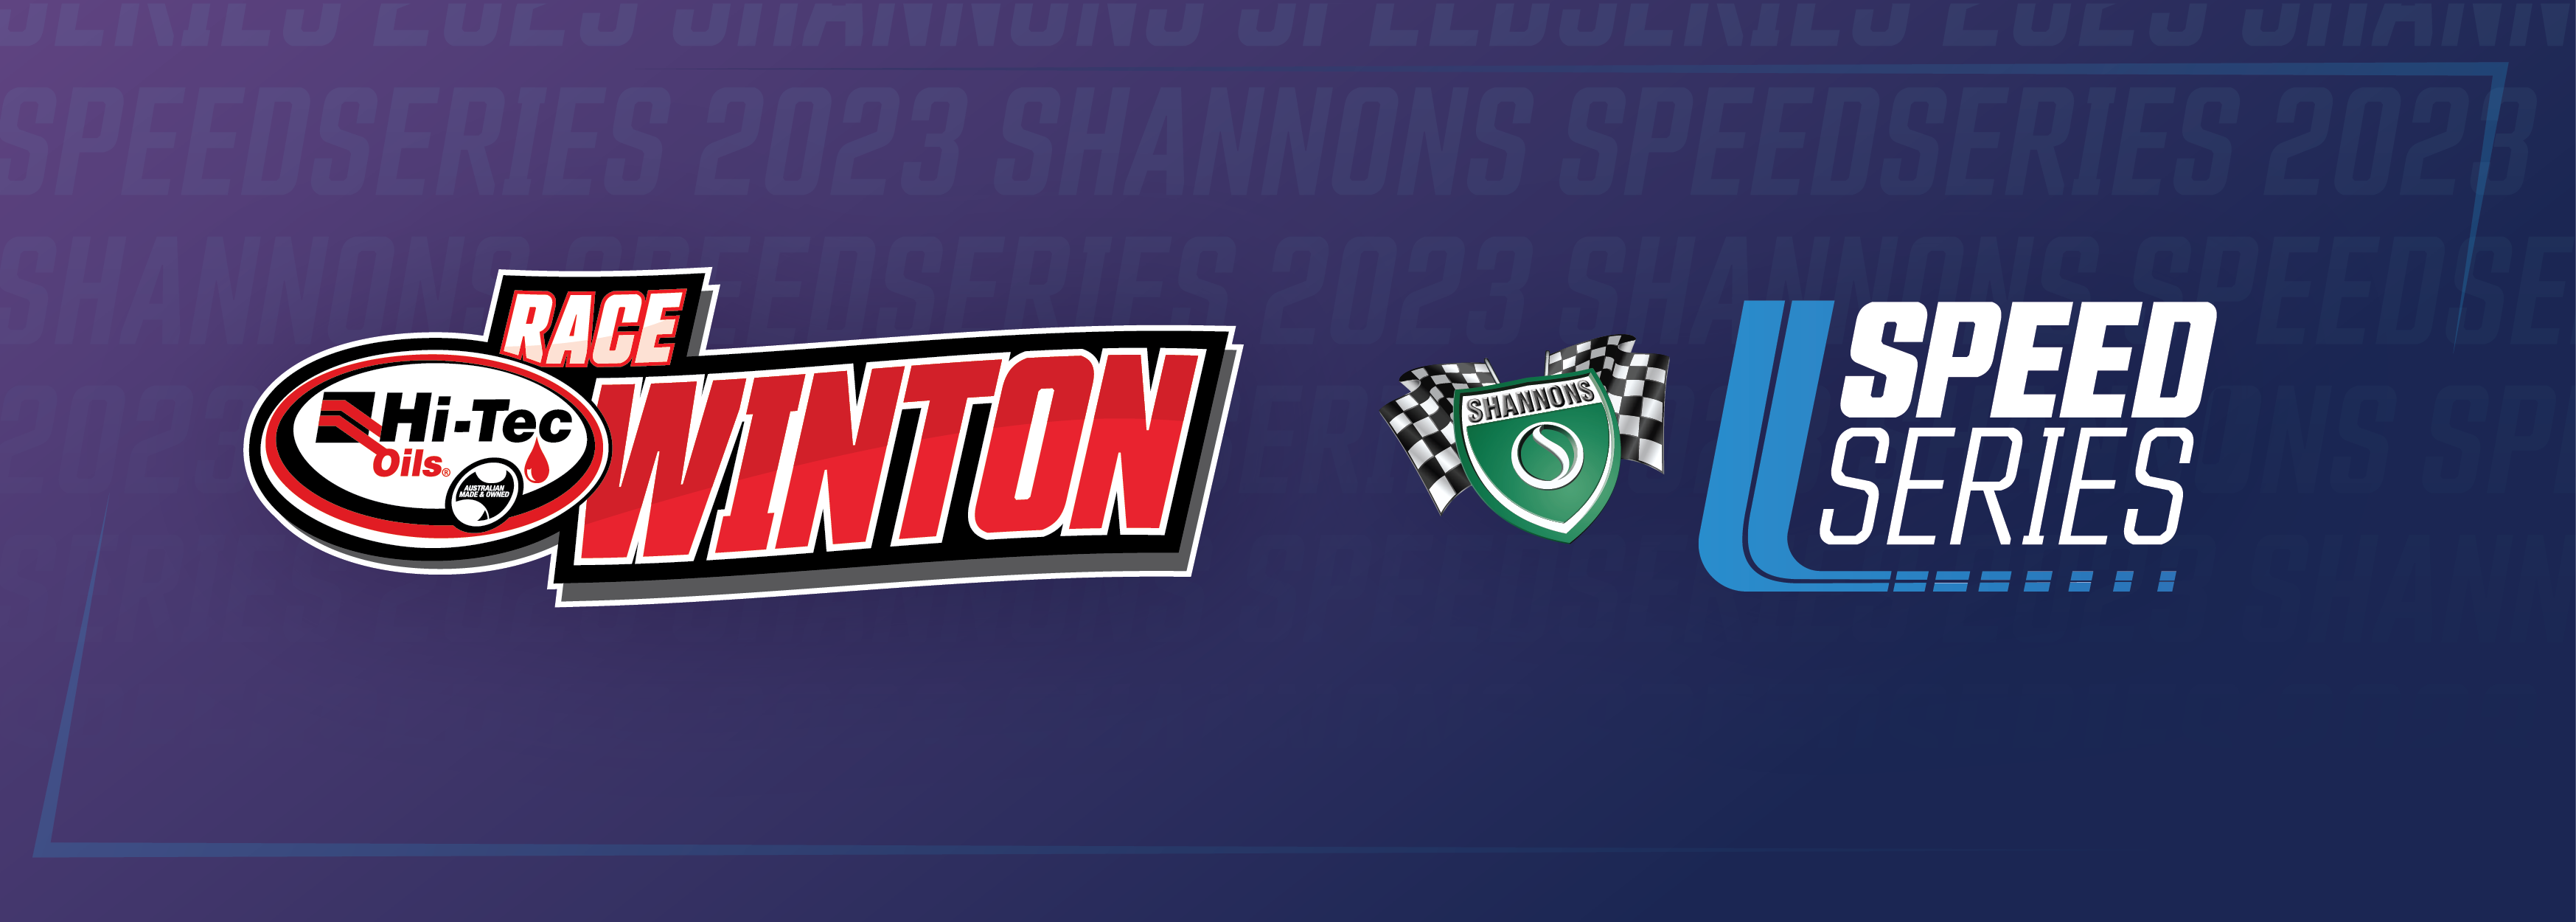 Race-Winton-Shannons-Speed-Series